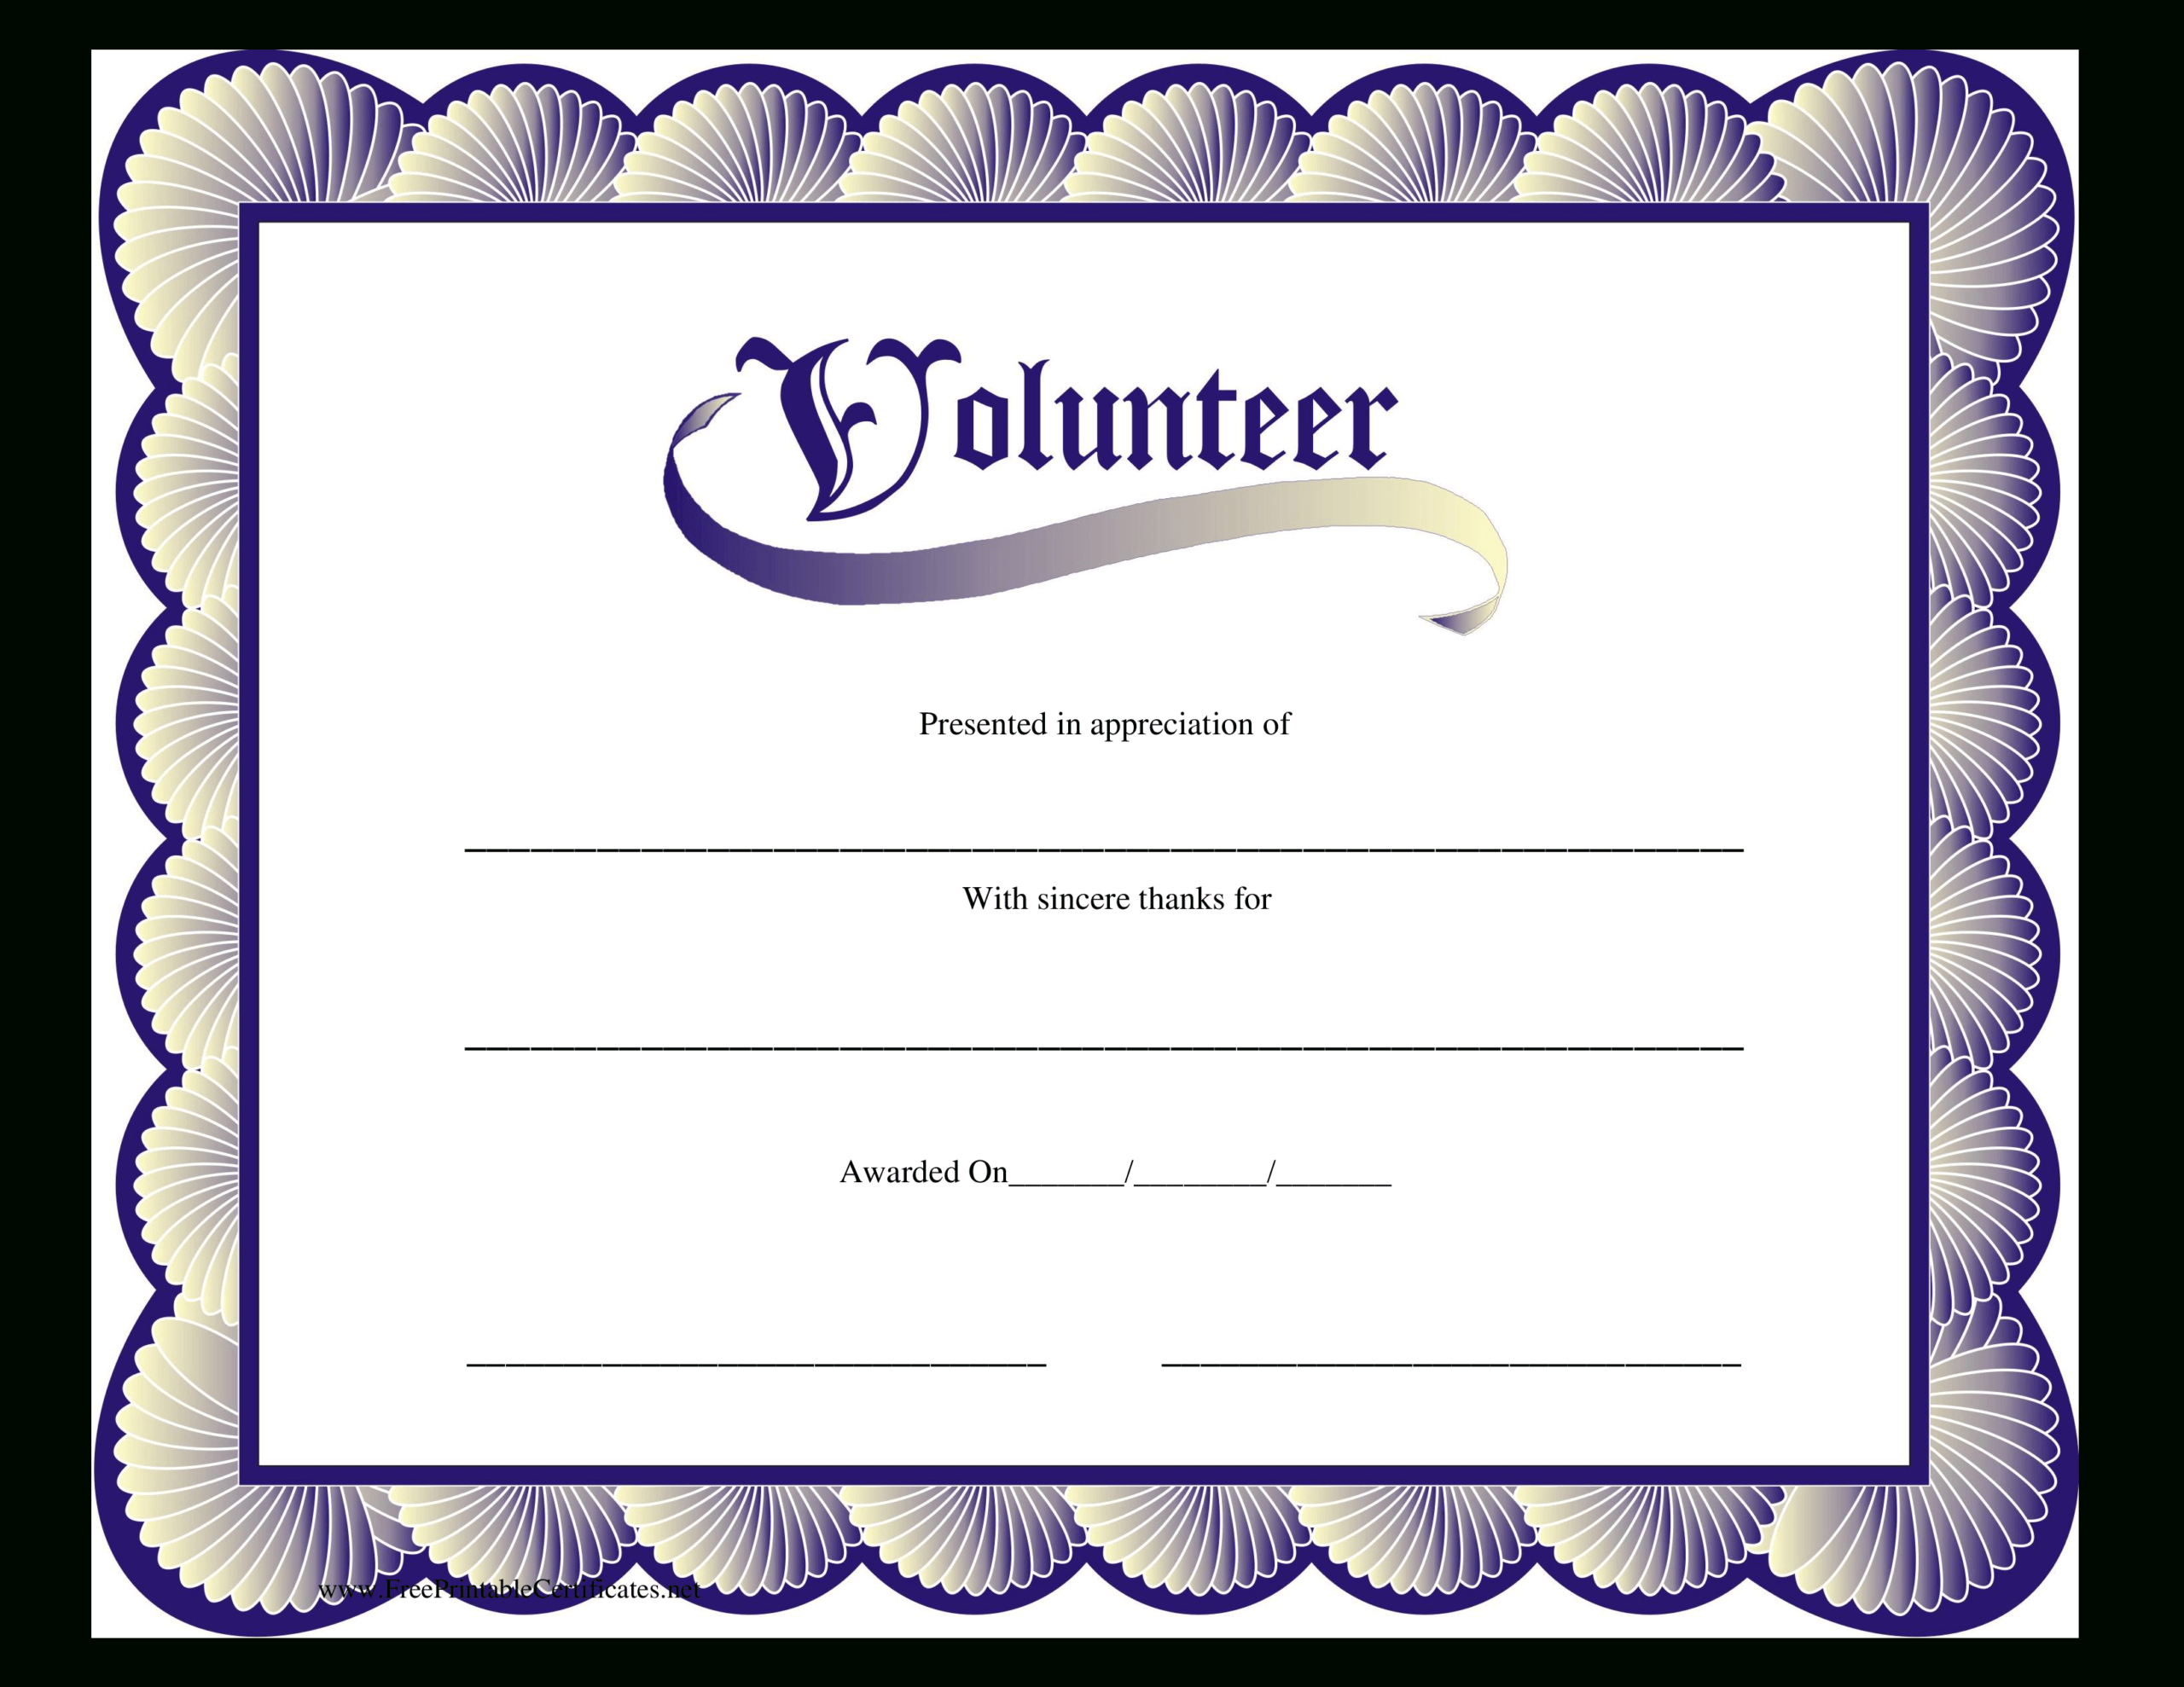 Volunteer Certificate | Templates At Allbusinesstemplates In Volunteer Certificate Templates